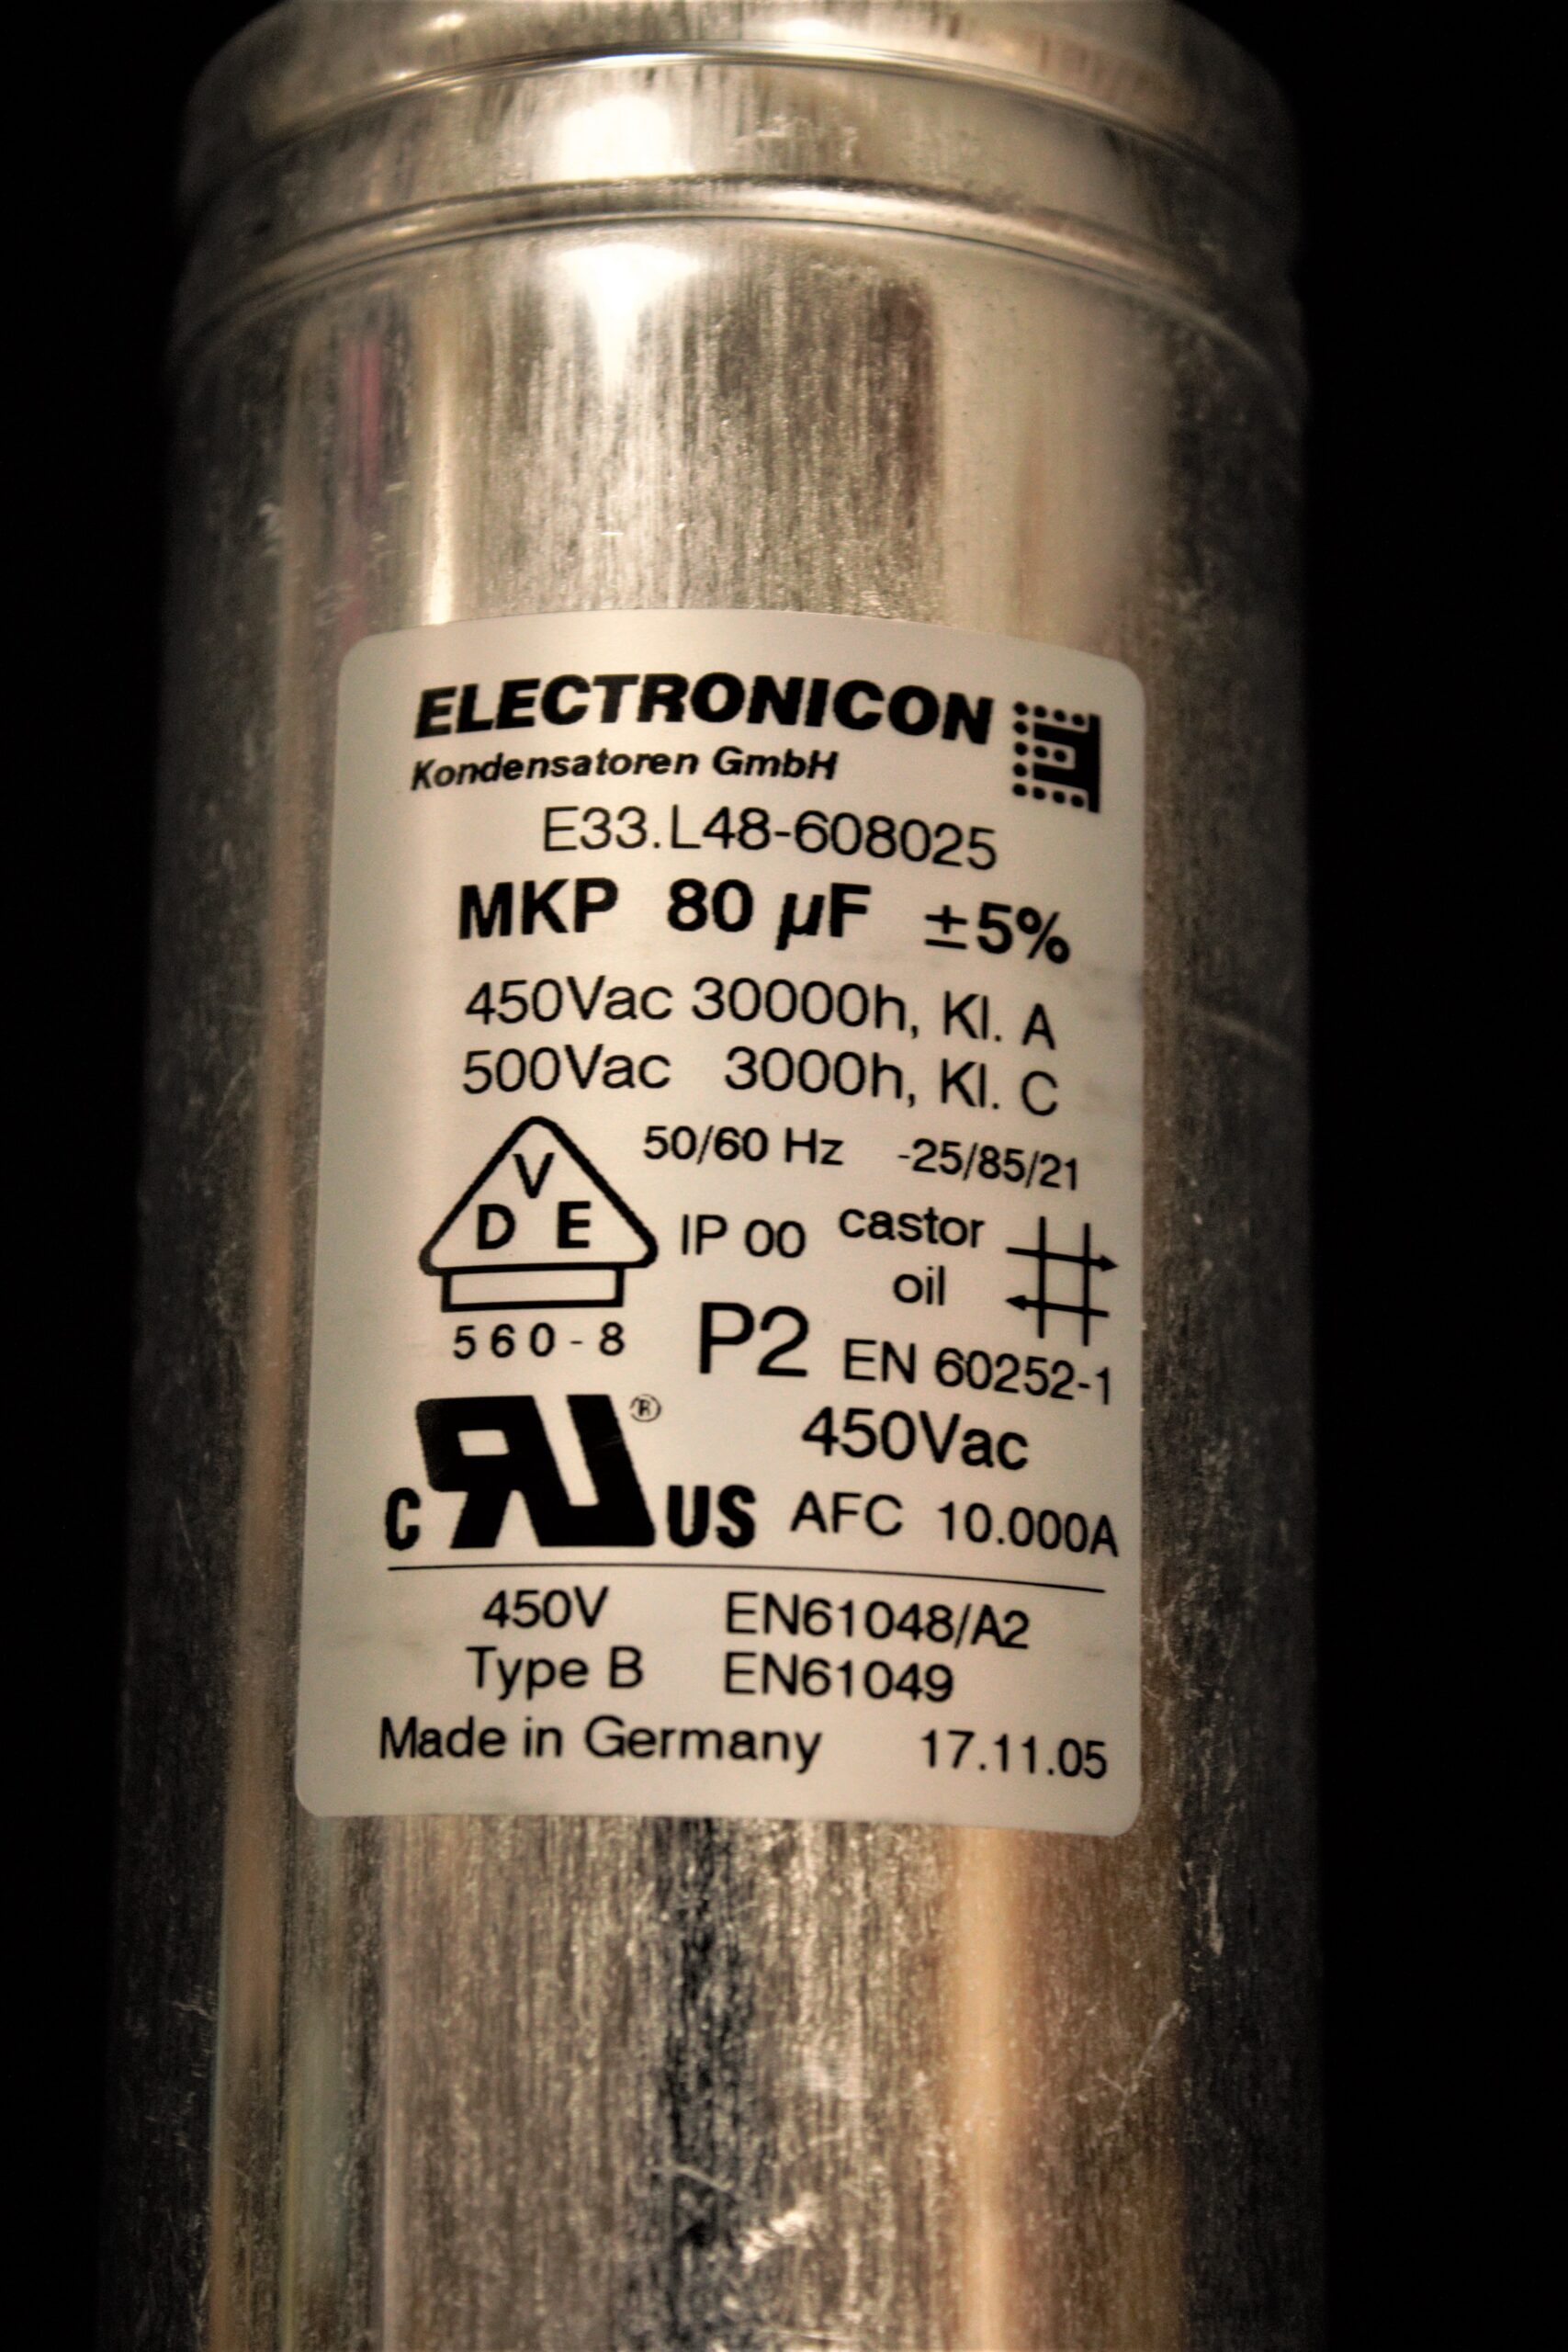 Electronicon Capacitor E33.L48.608025/22001 - UPE Inc.